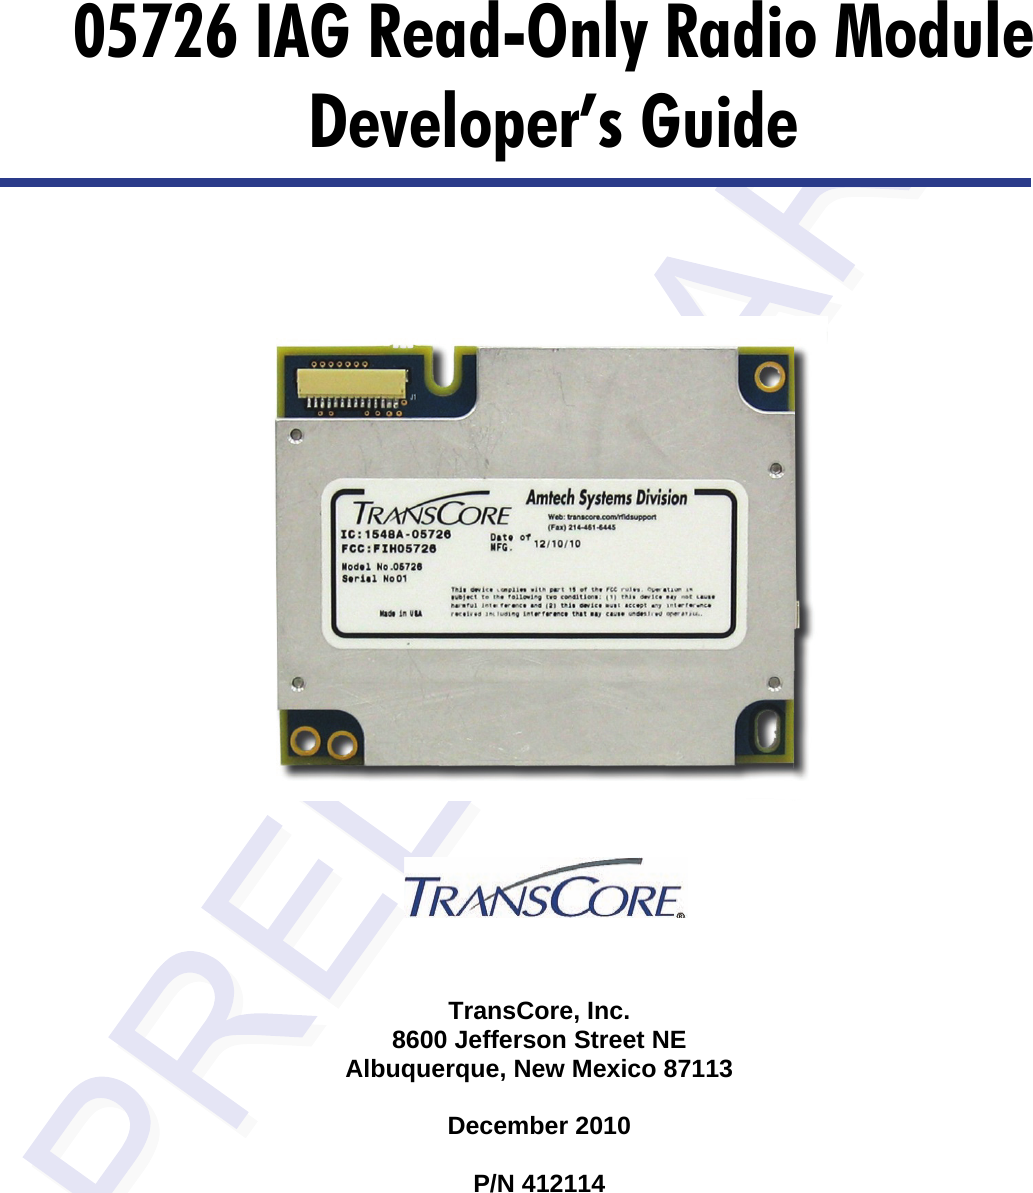            05726 IAG Read-Only Radio Module Developer’s Guide   TransCore, Inc. 8600 Jefferson Street NE Albuquerque, New Mexico 87113  December 2010  P/N 412114   